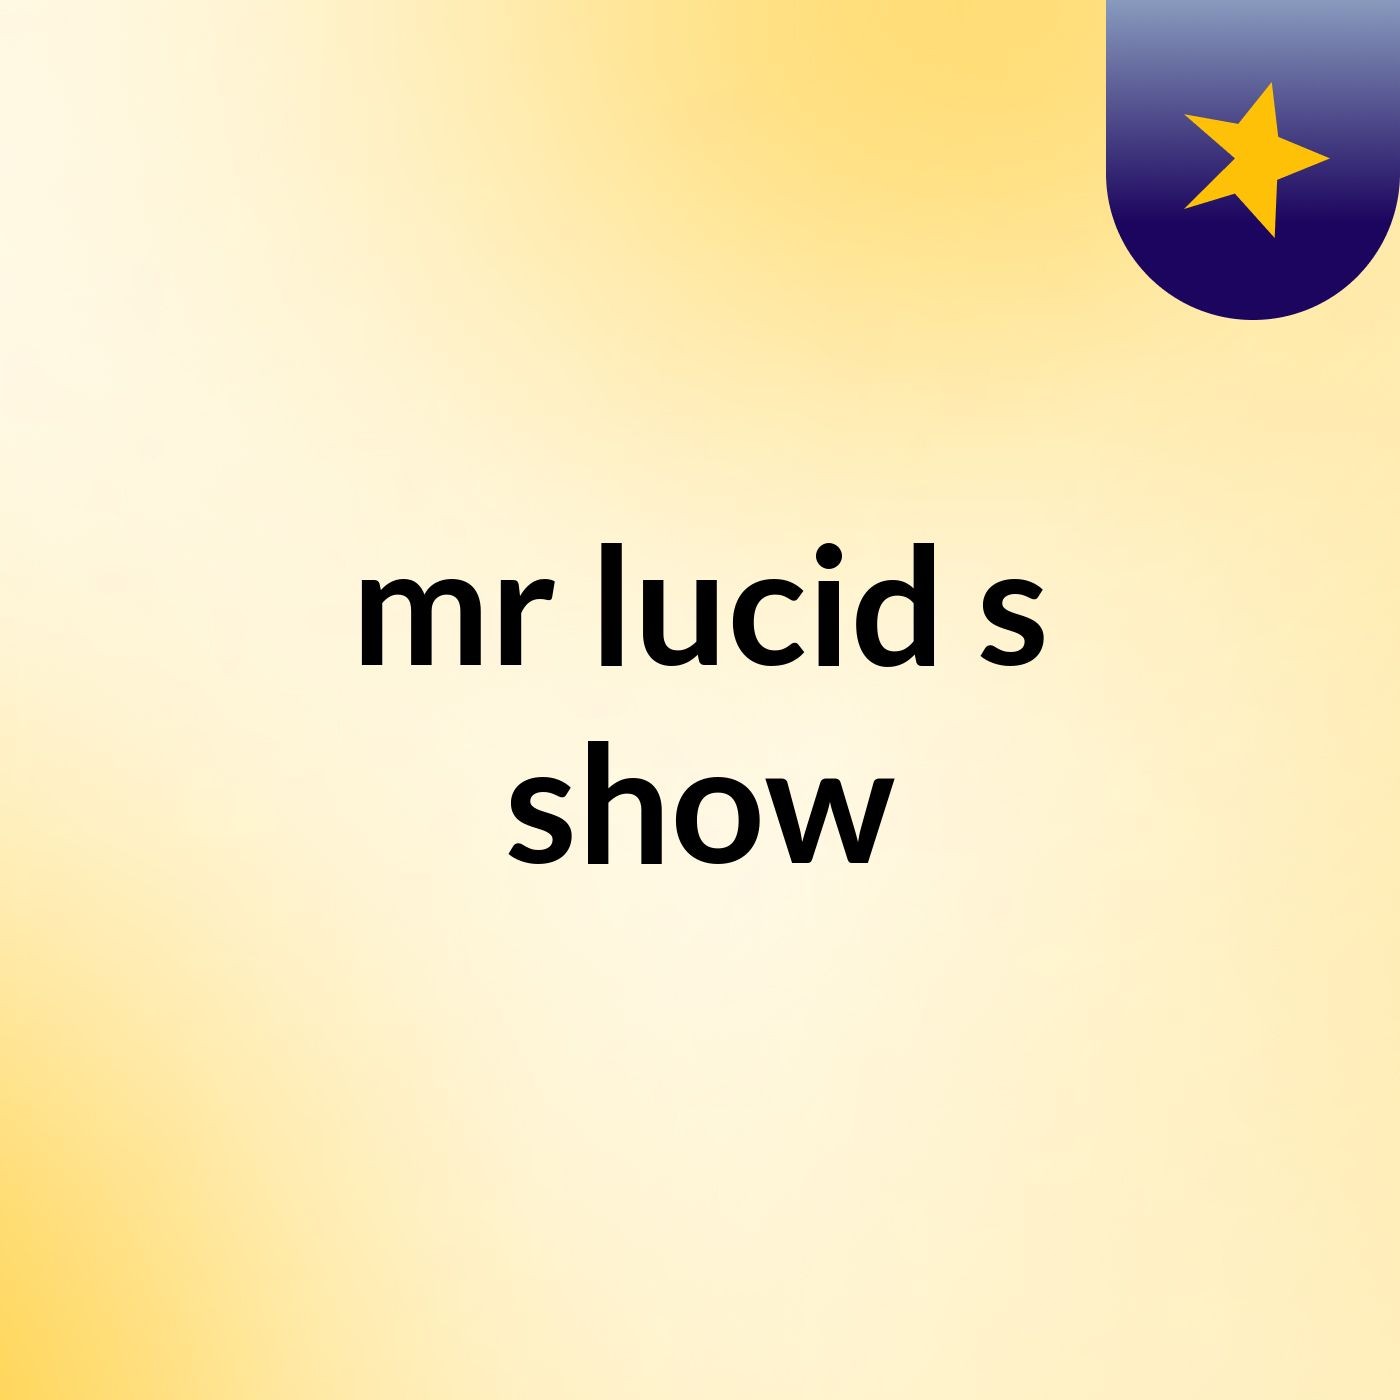 mr lucid's show